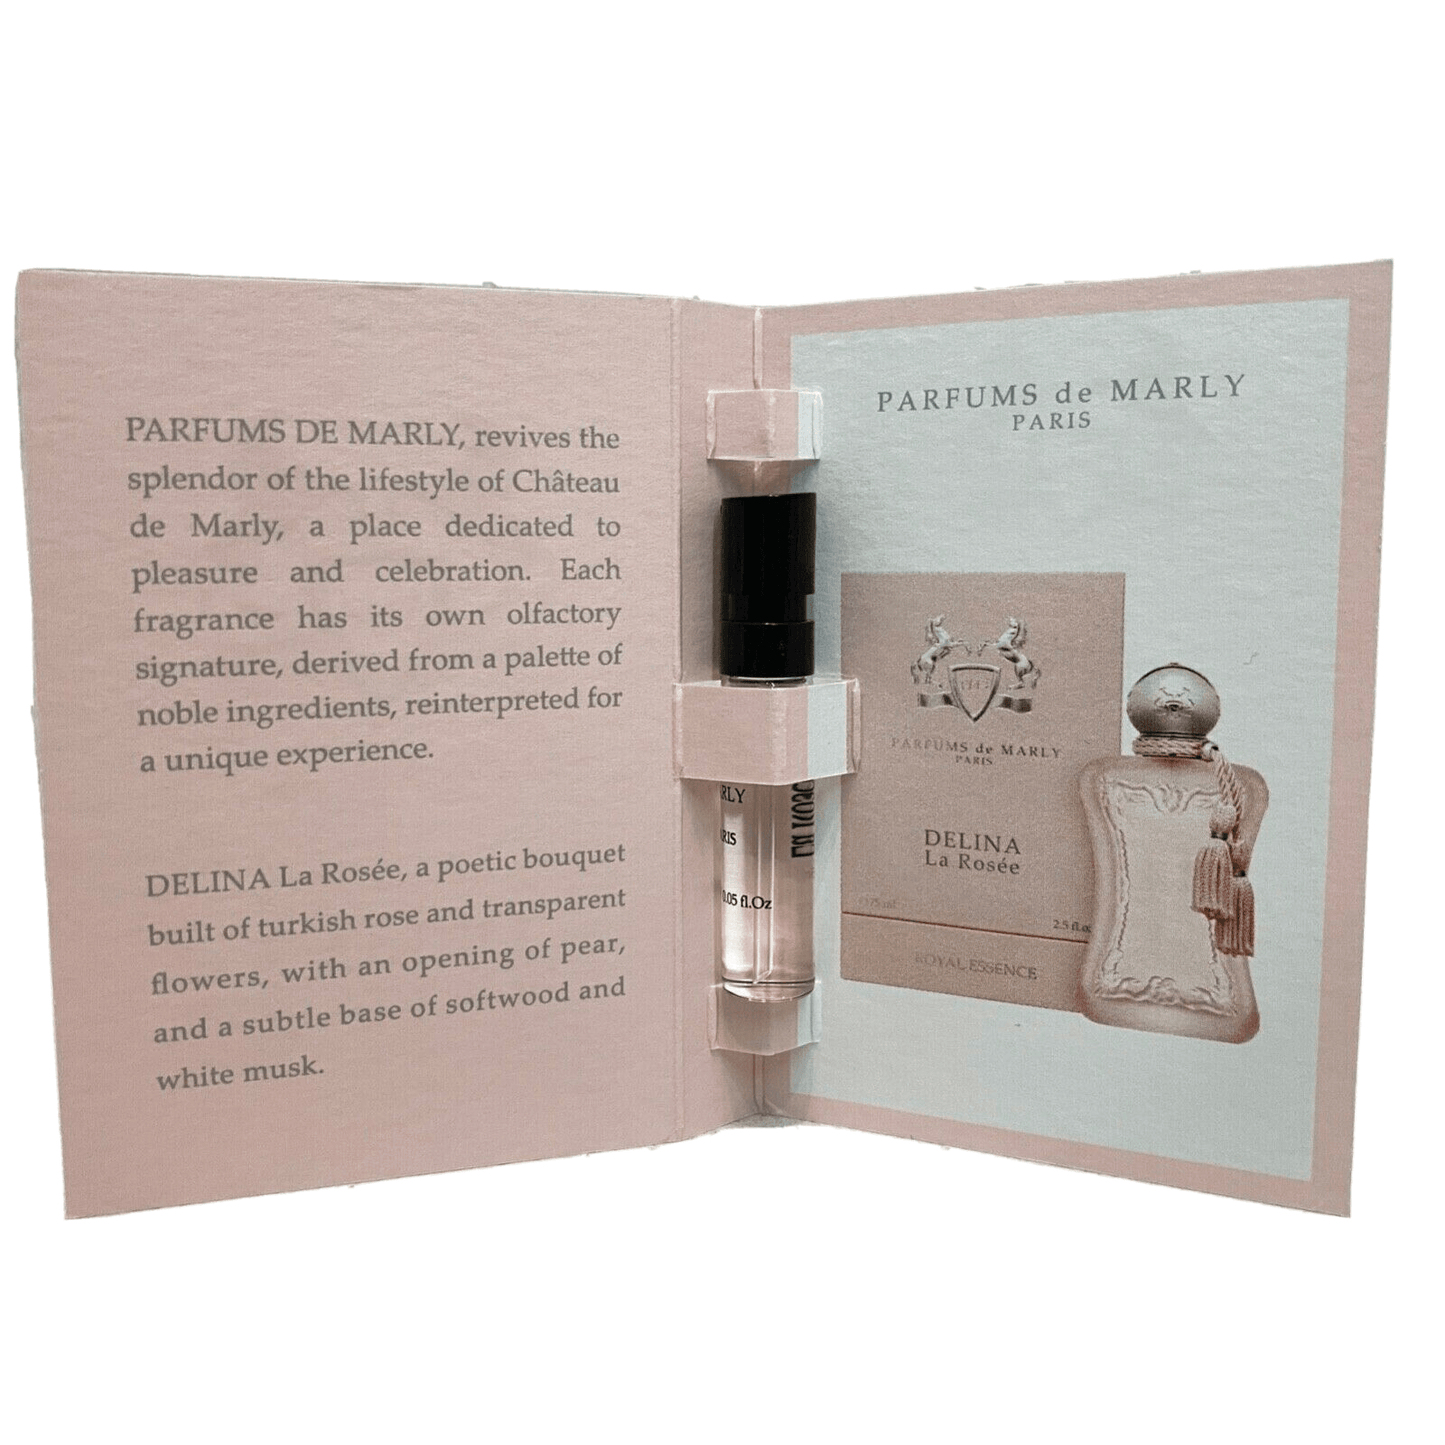 Parfums De Marly Delina La Rosee 官方香水样品 1.5 毫升 0.05 液体。 盎司